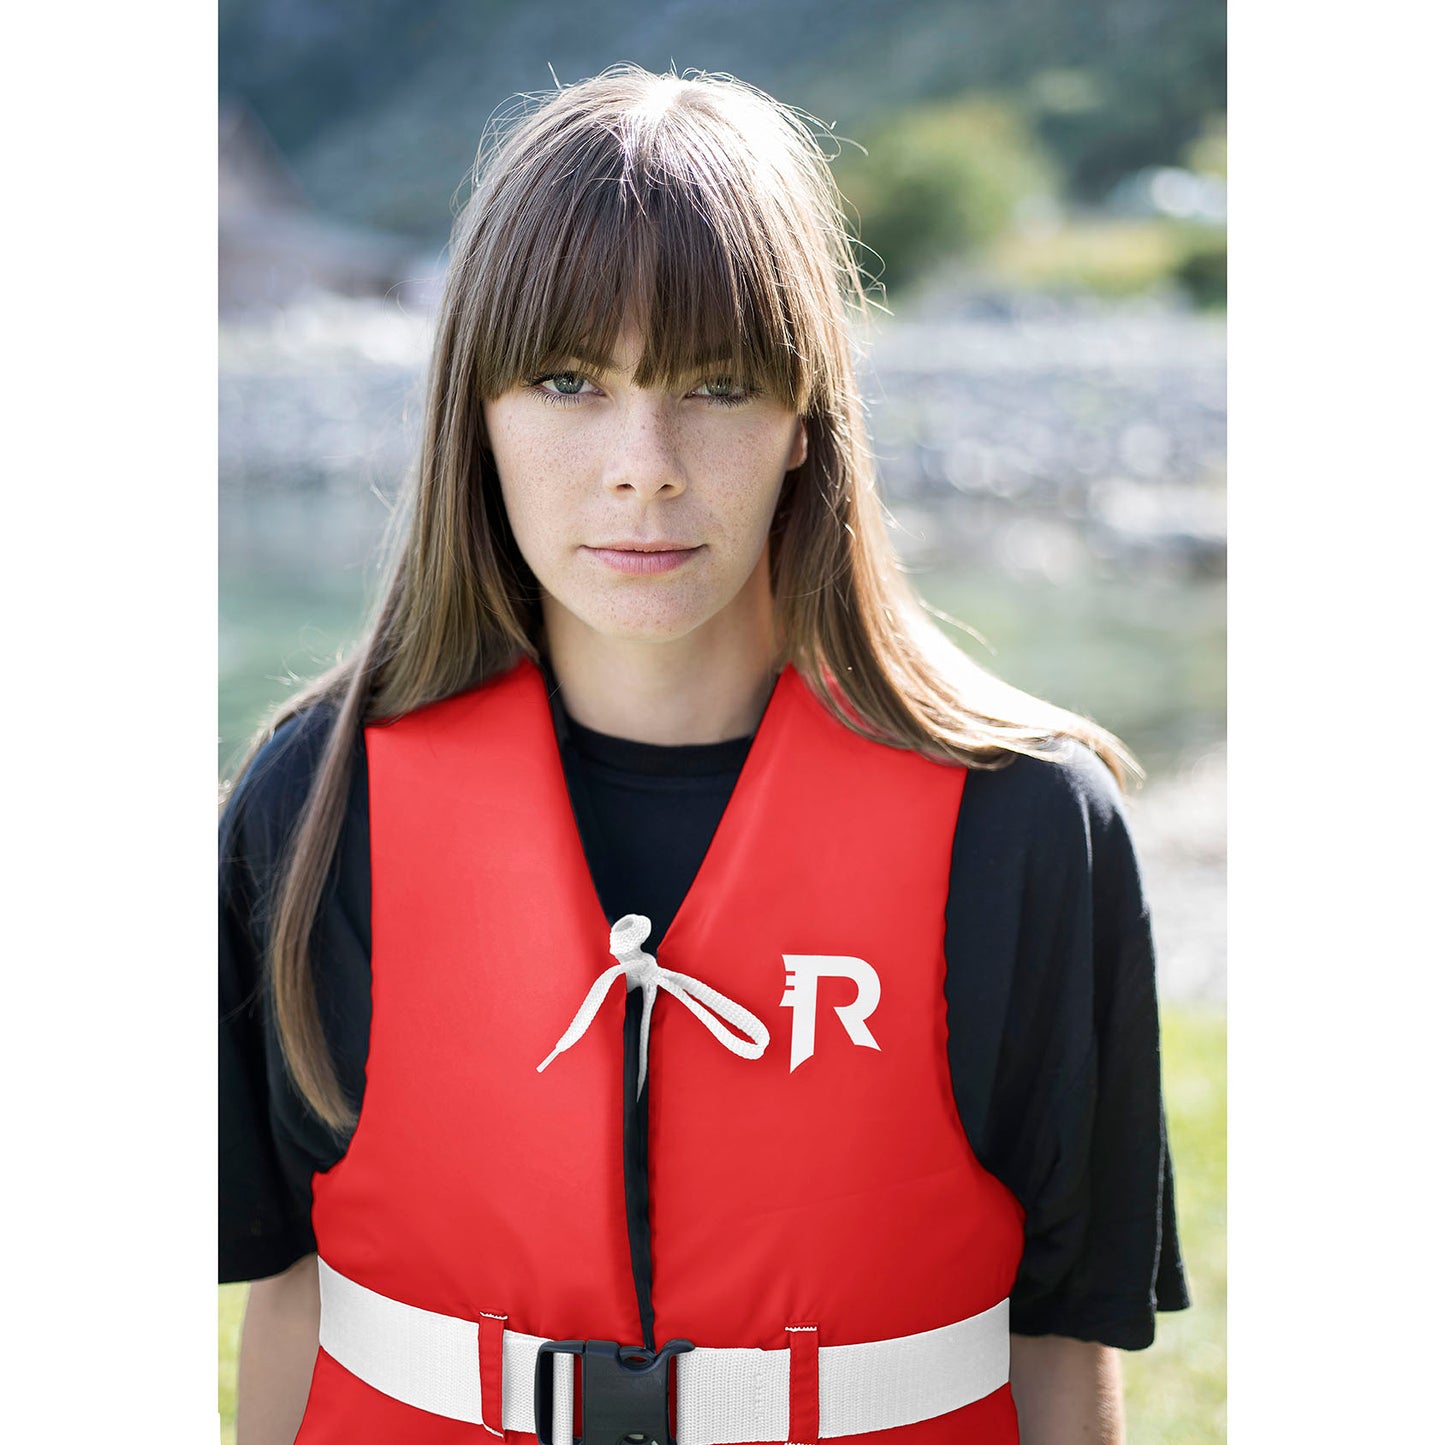 Regatta Pop sailing vest